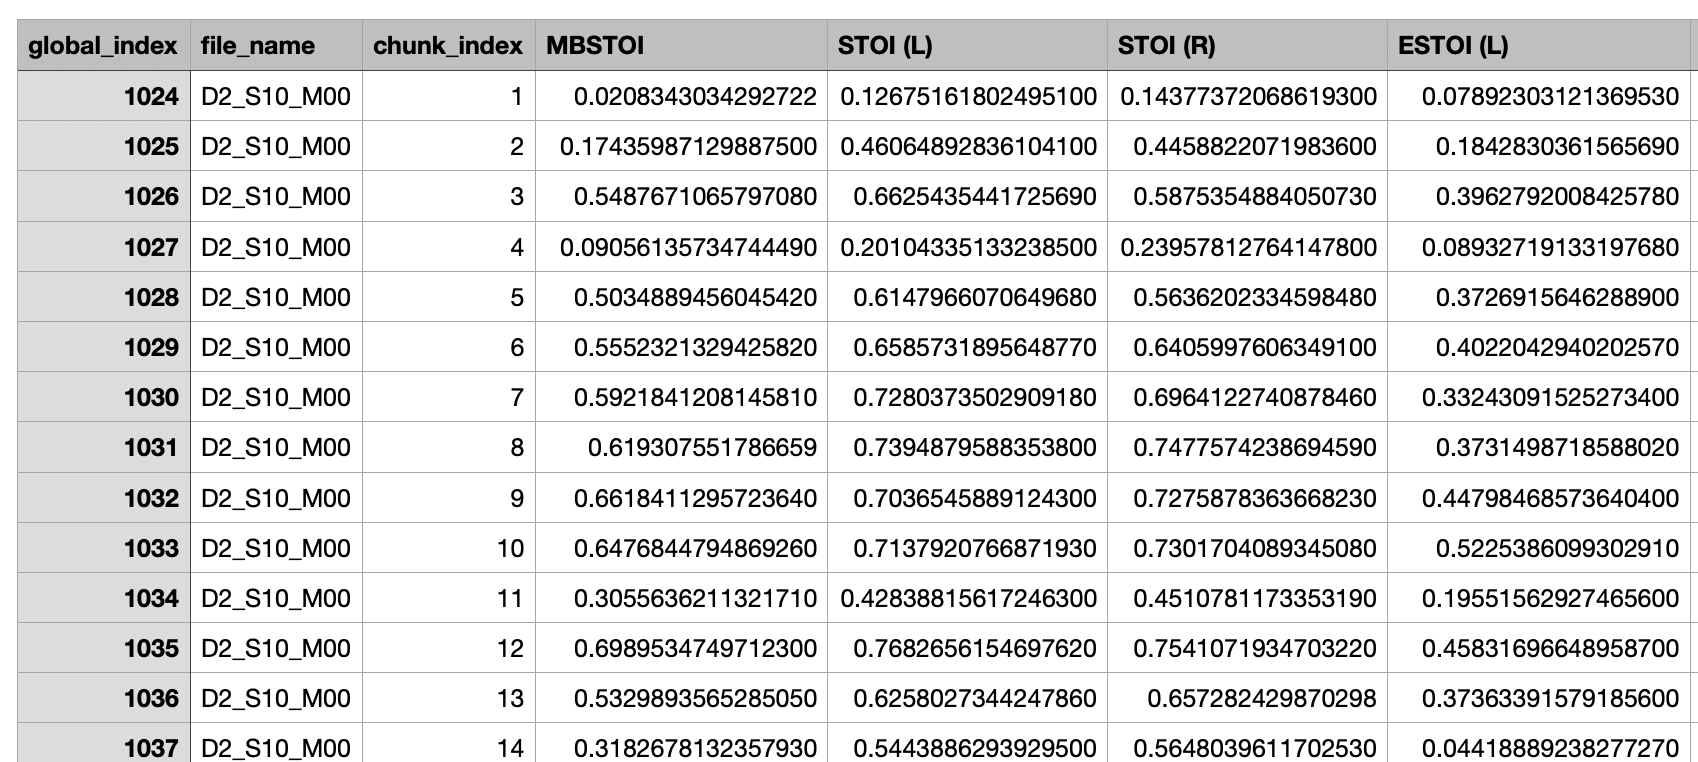 example metrics output table